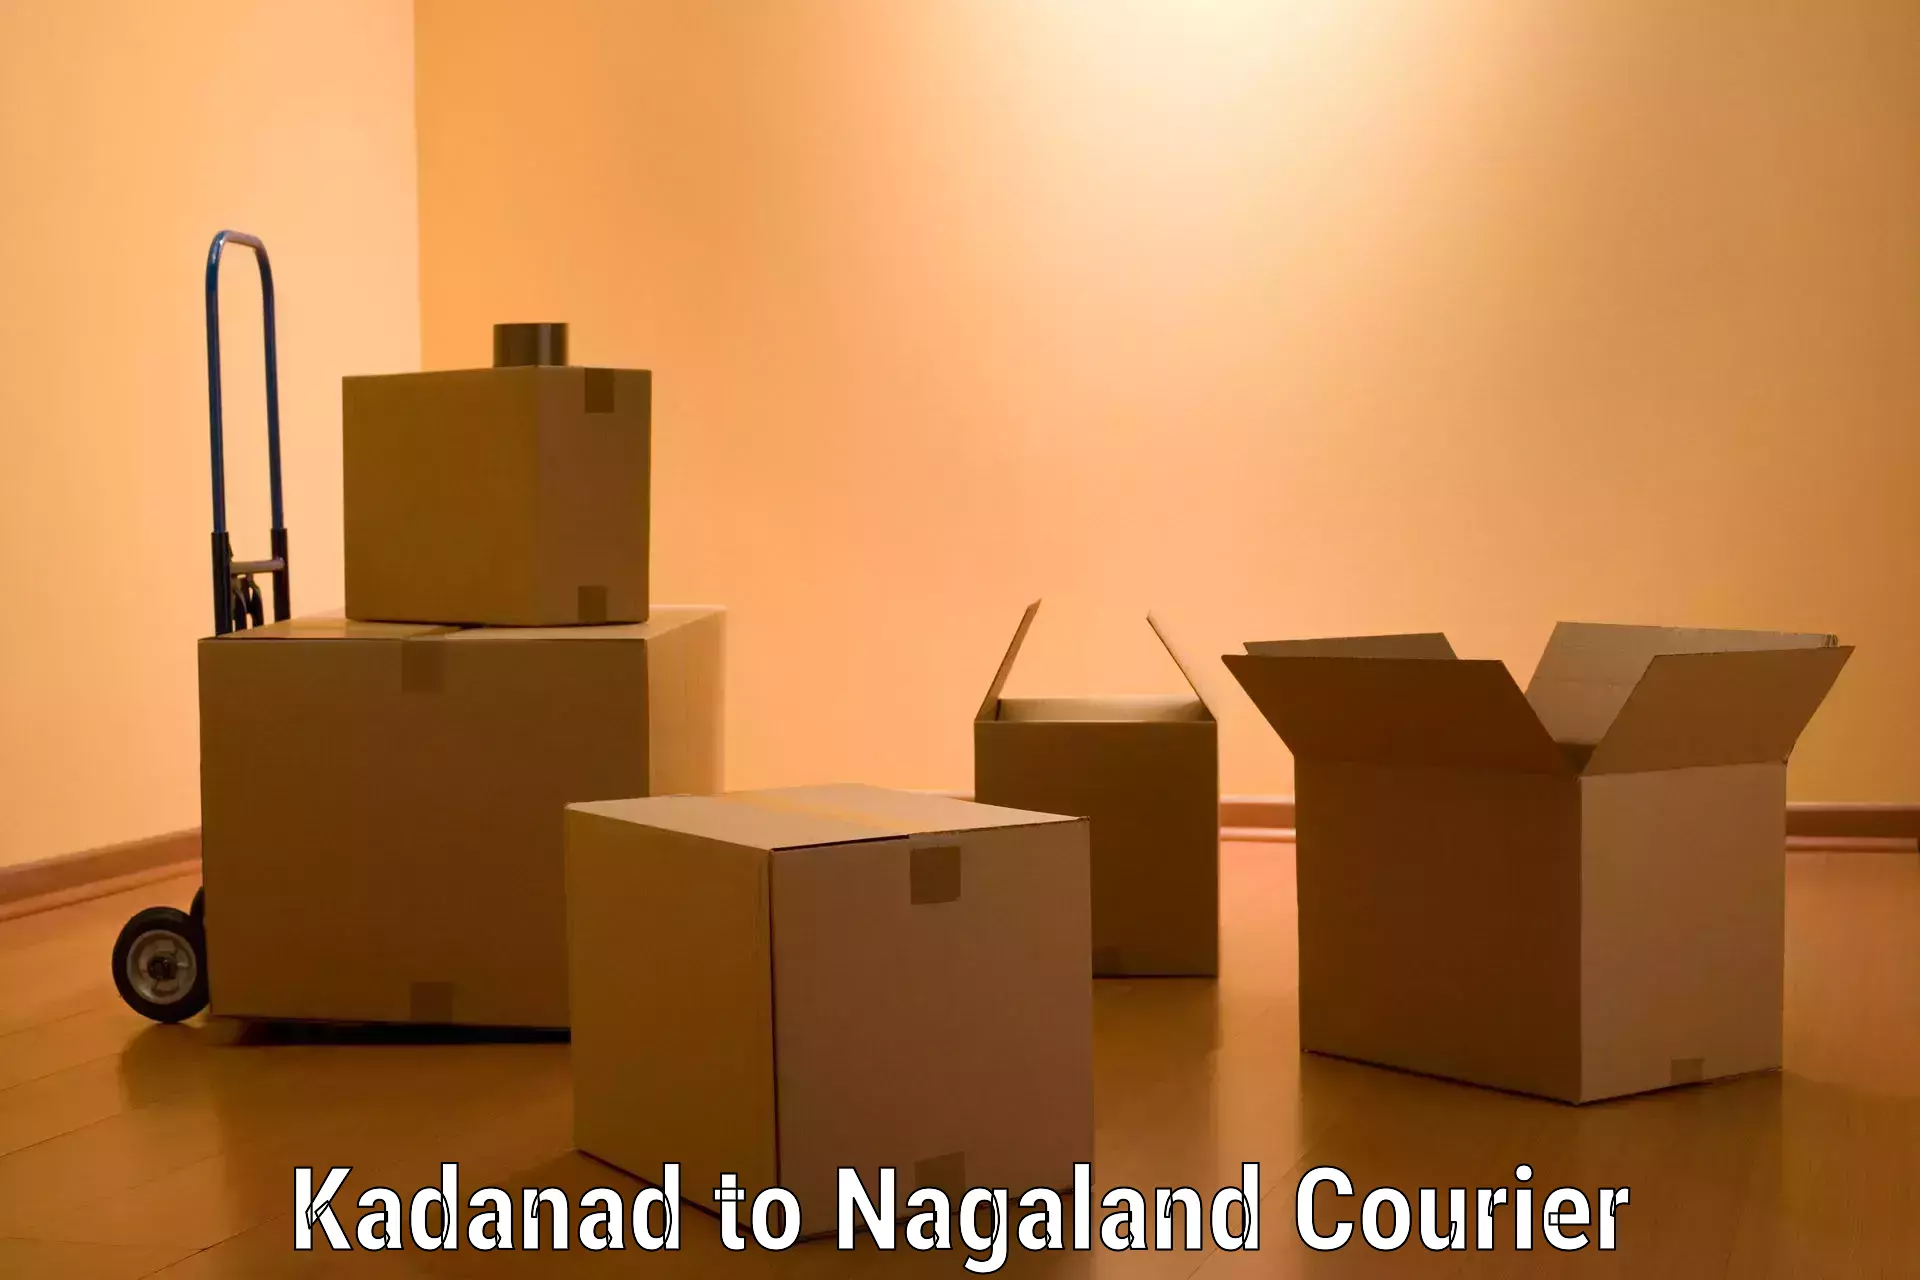 Furniture moving specialists Kadanad to Nagaland